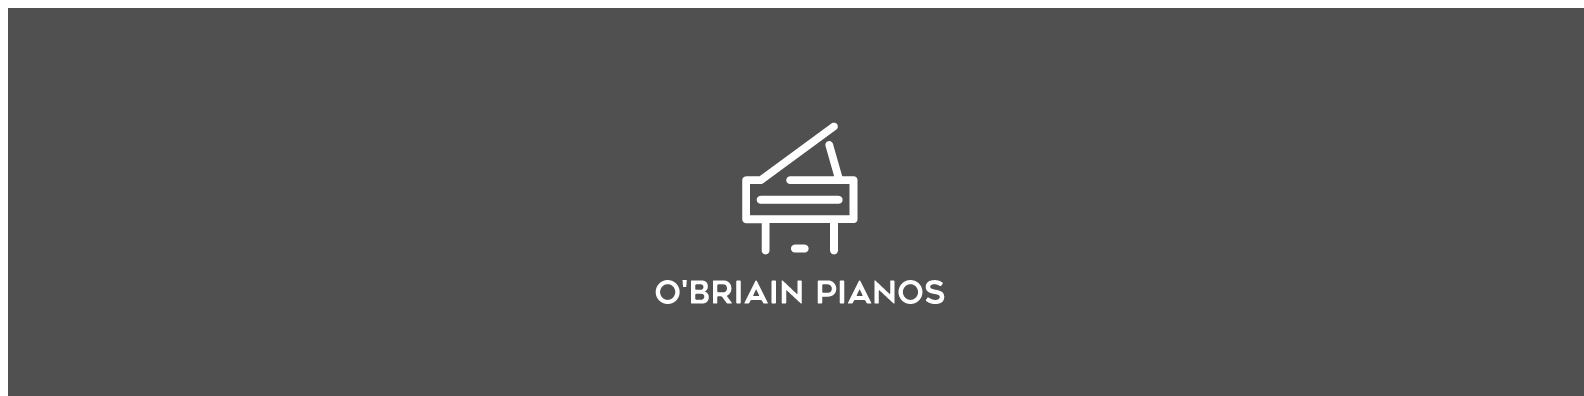 Yamaha U3-O'Briain Pianos